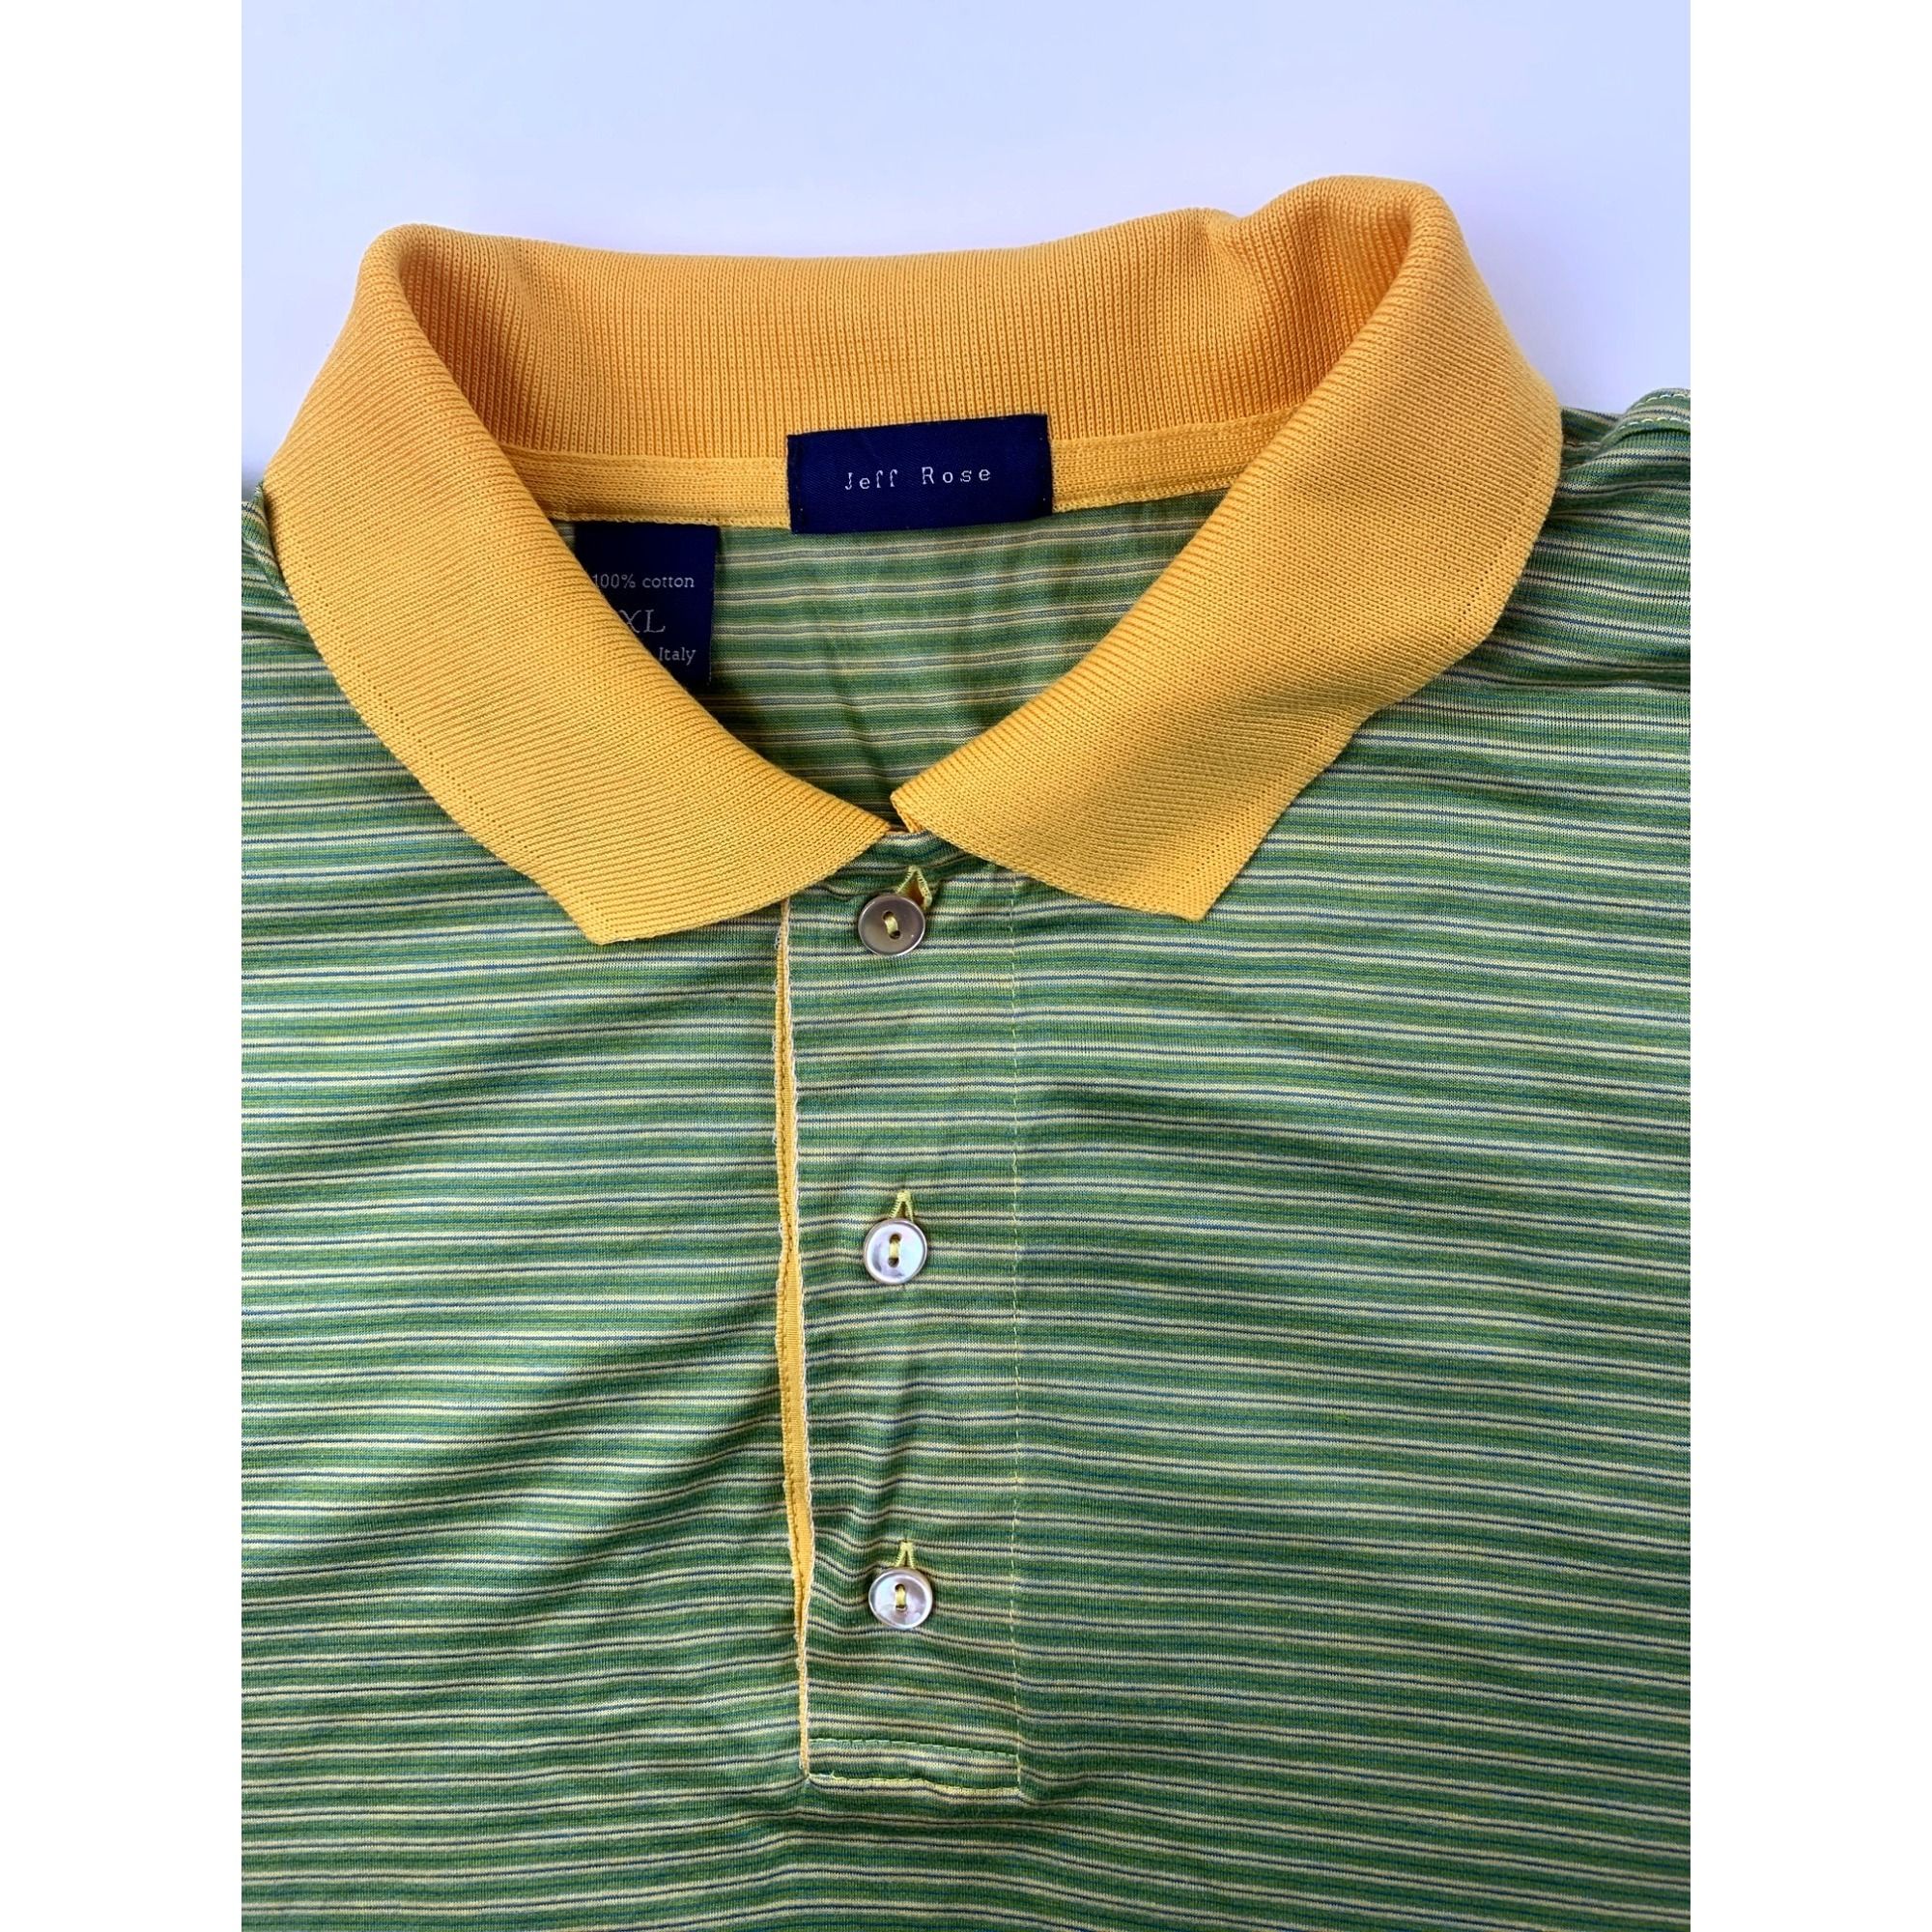 Jeff Rose Jeff Rose Mens Green & Yellow Mercerized Cotton Polo Shirt Size US XL / EU 56 / 4 - 4 Thumbnail